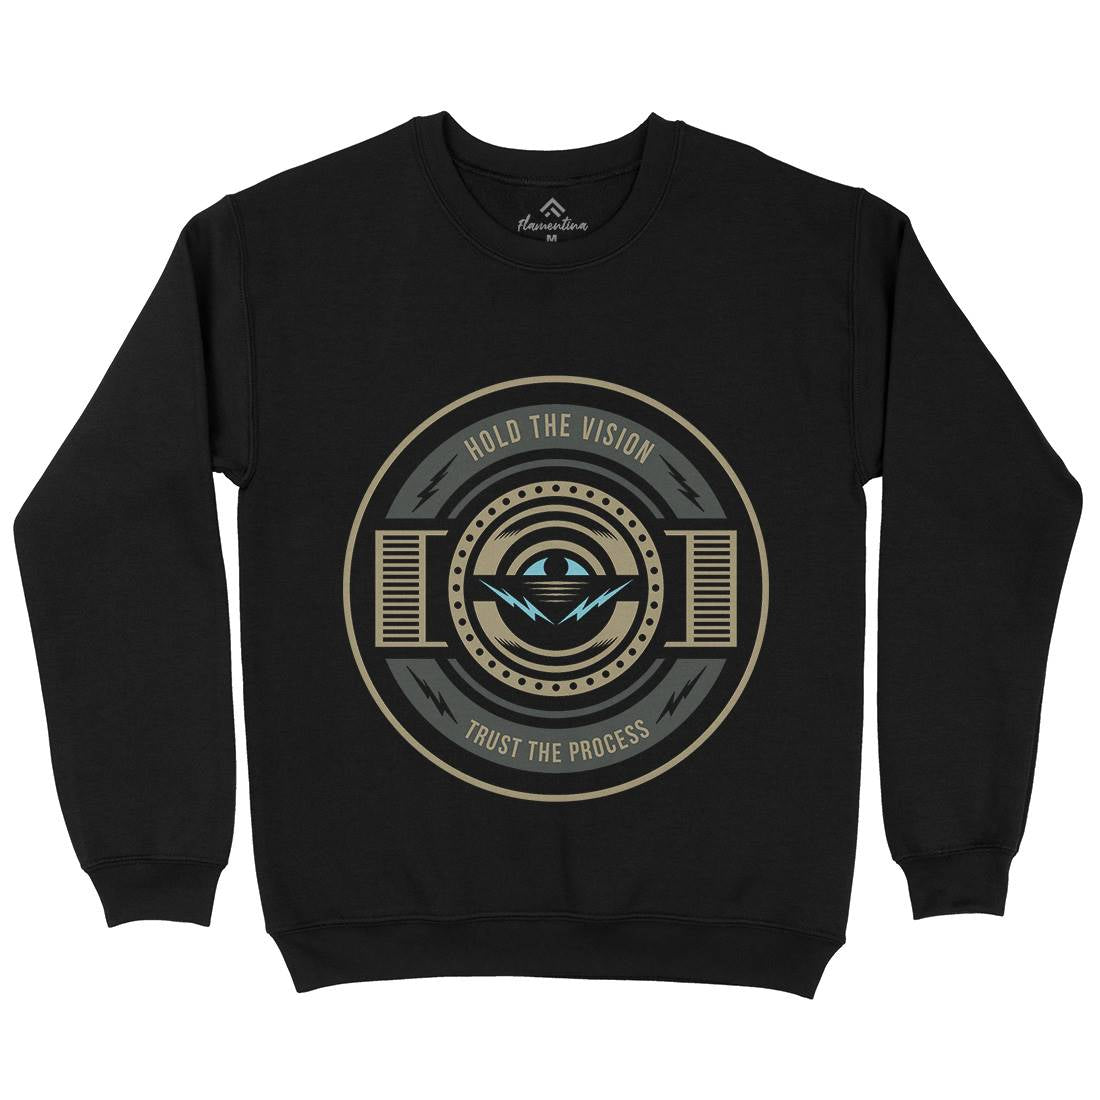 Hold The Vision Mens Crew Neck Sweatshirt Illuminati A331